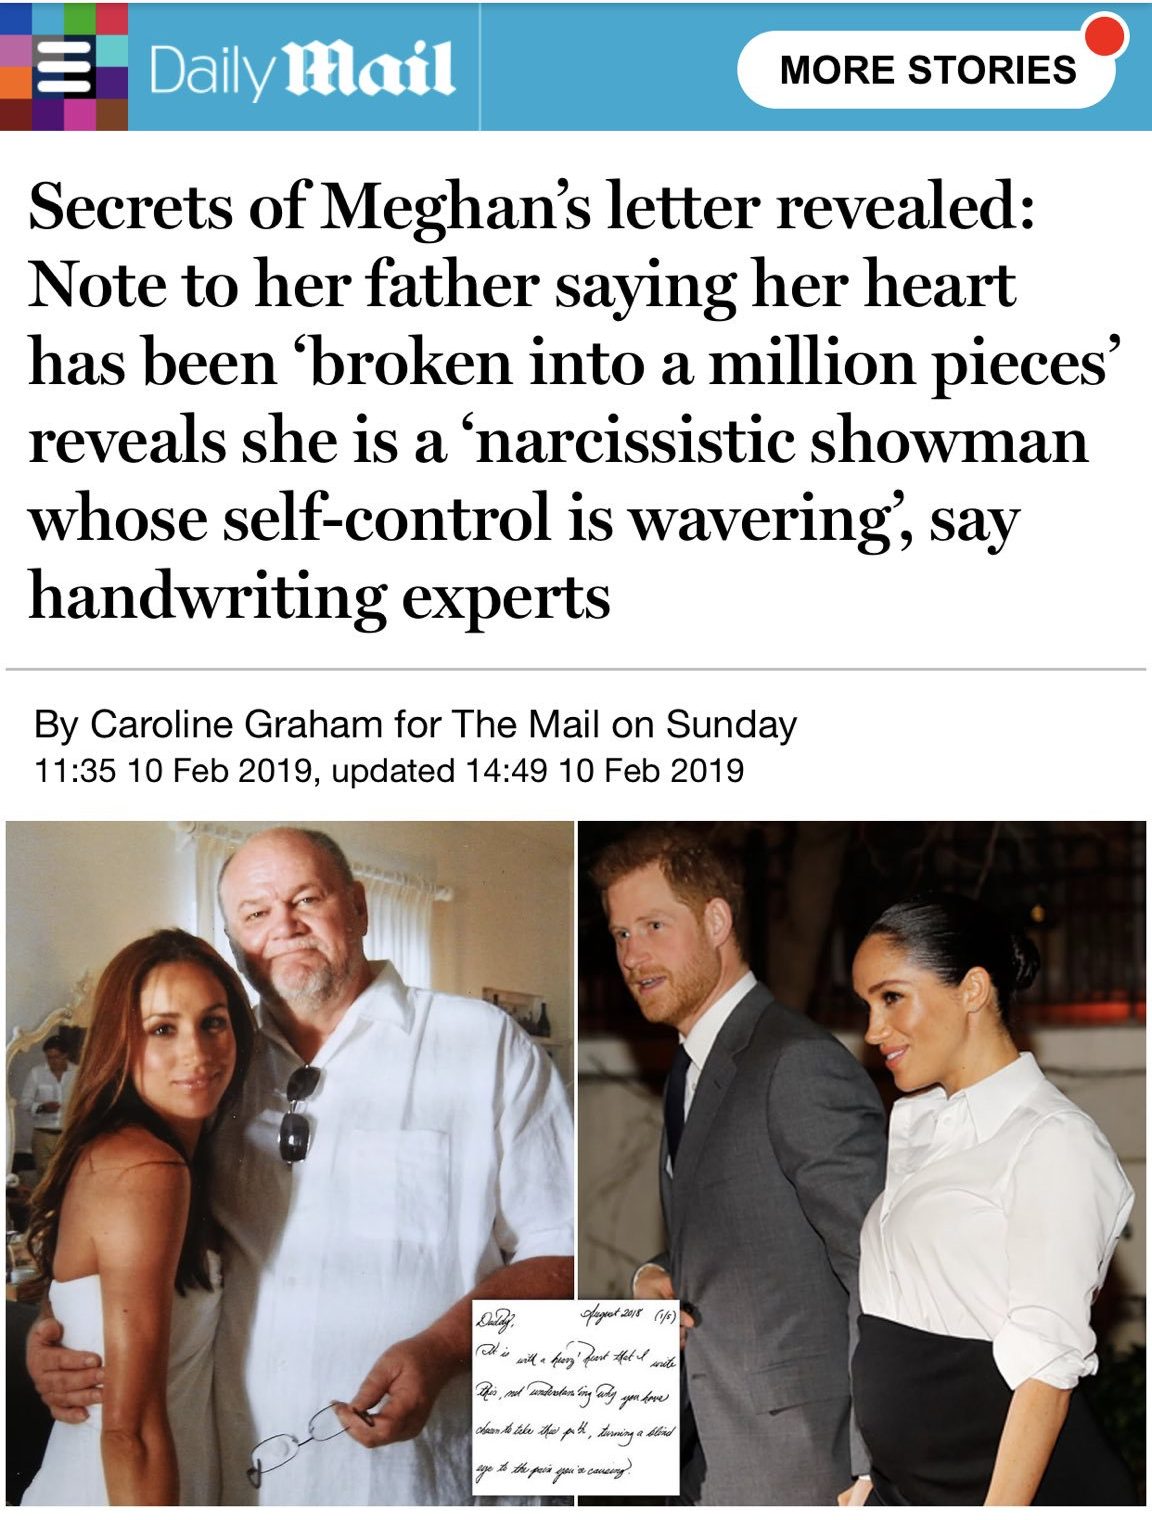 Caroline Graham publishes Meghan's private letters